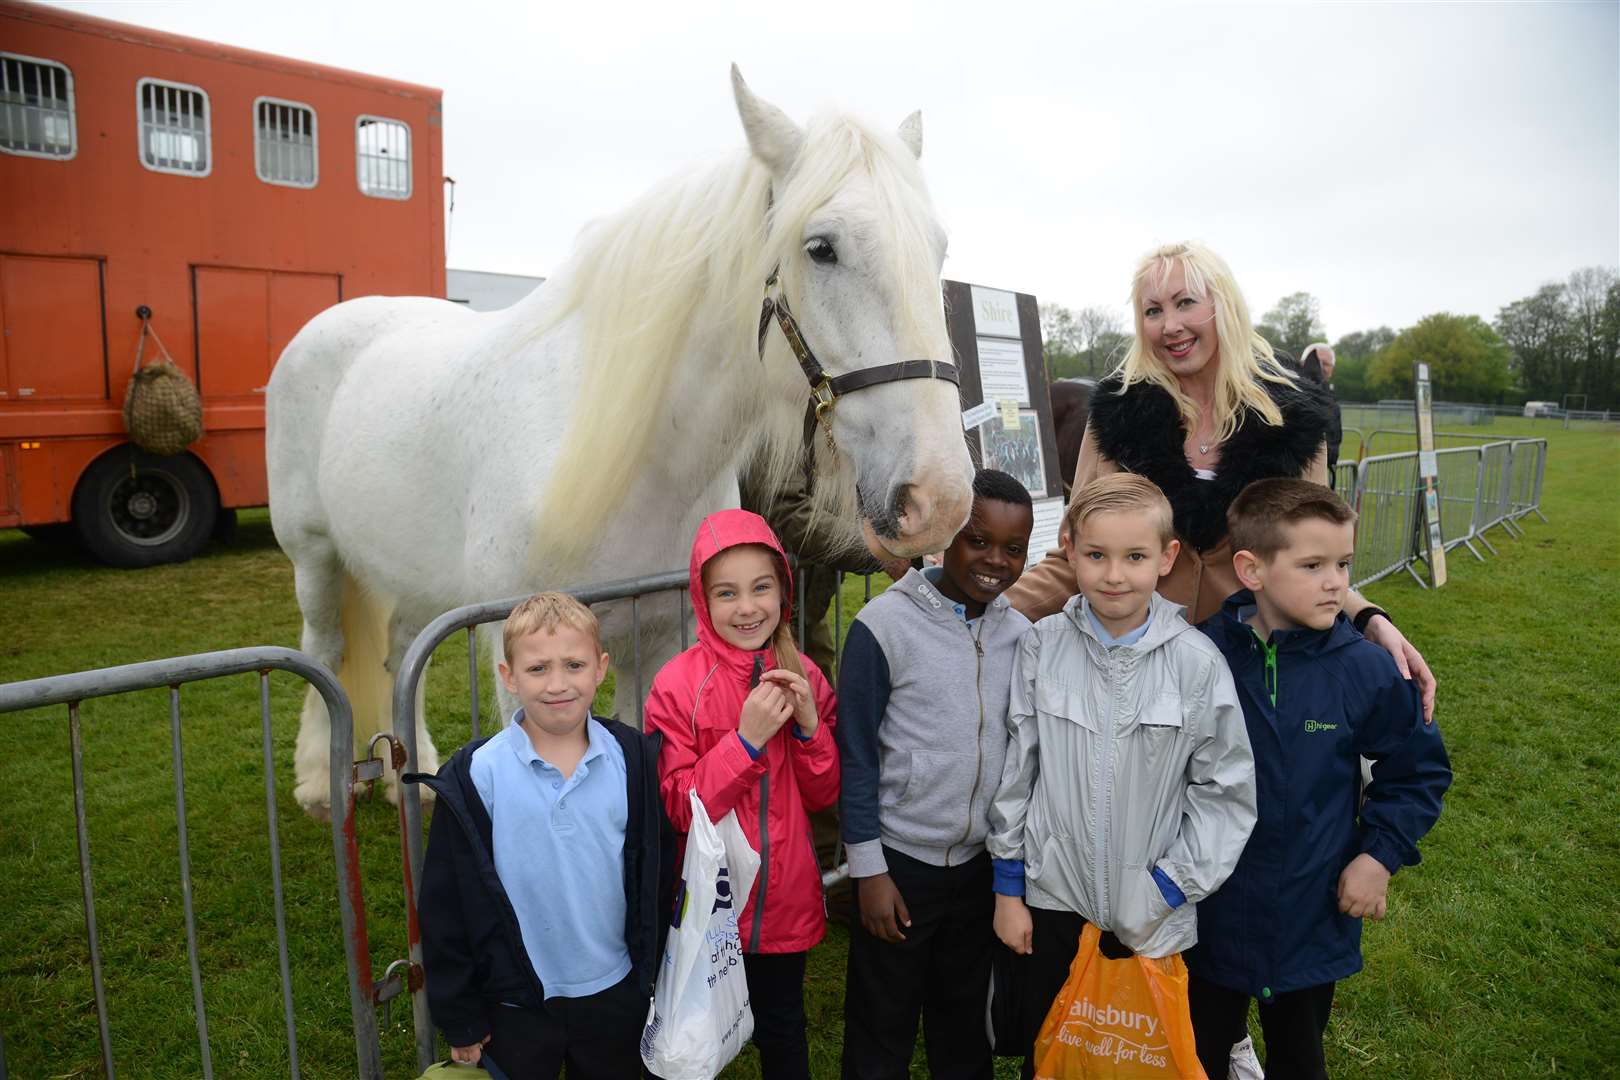 Children visit the Working Horse Trust stand